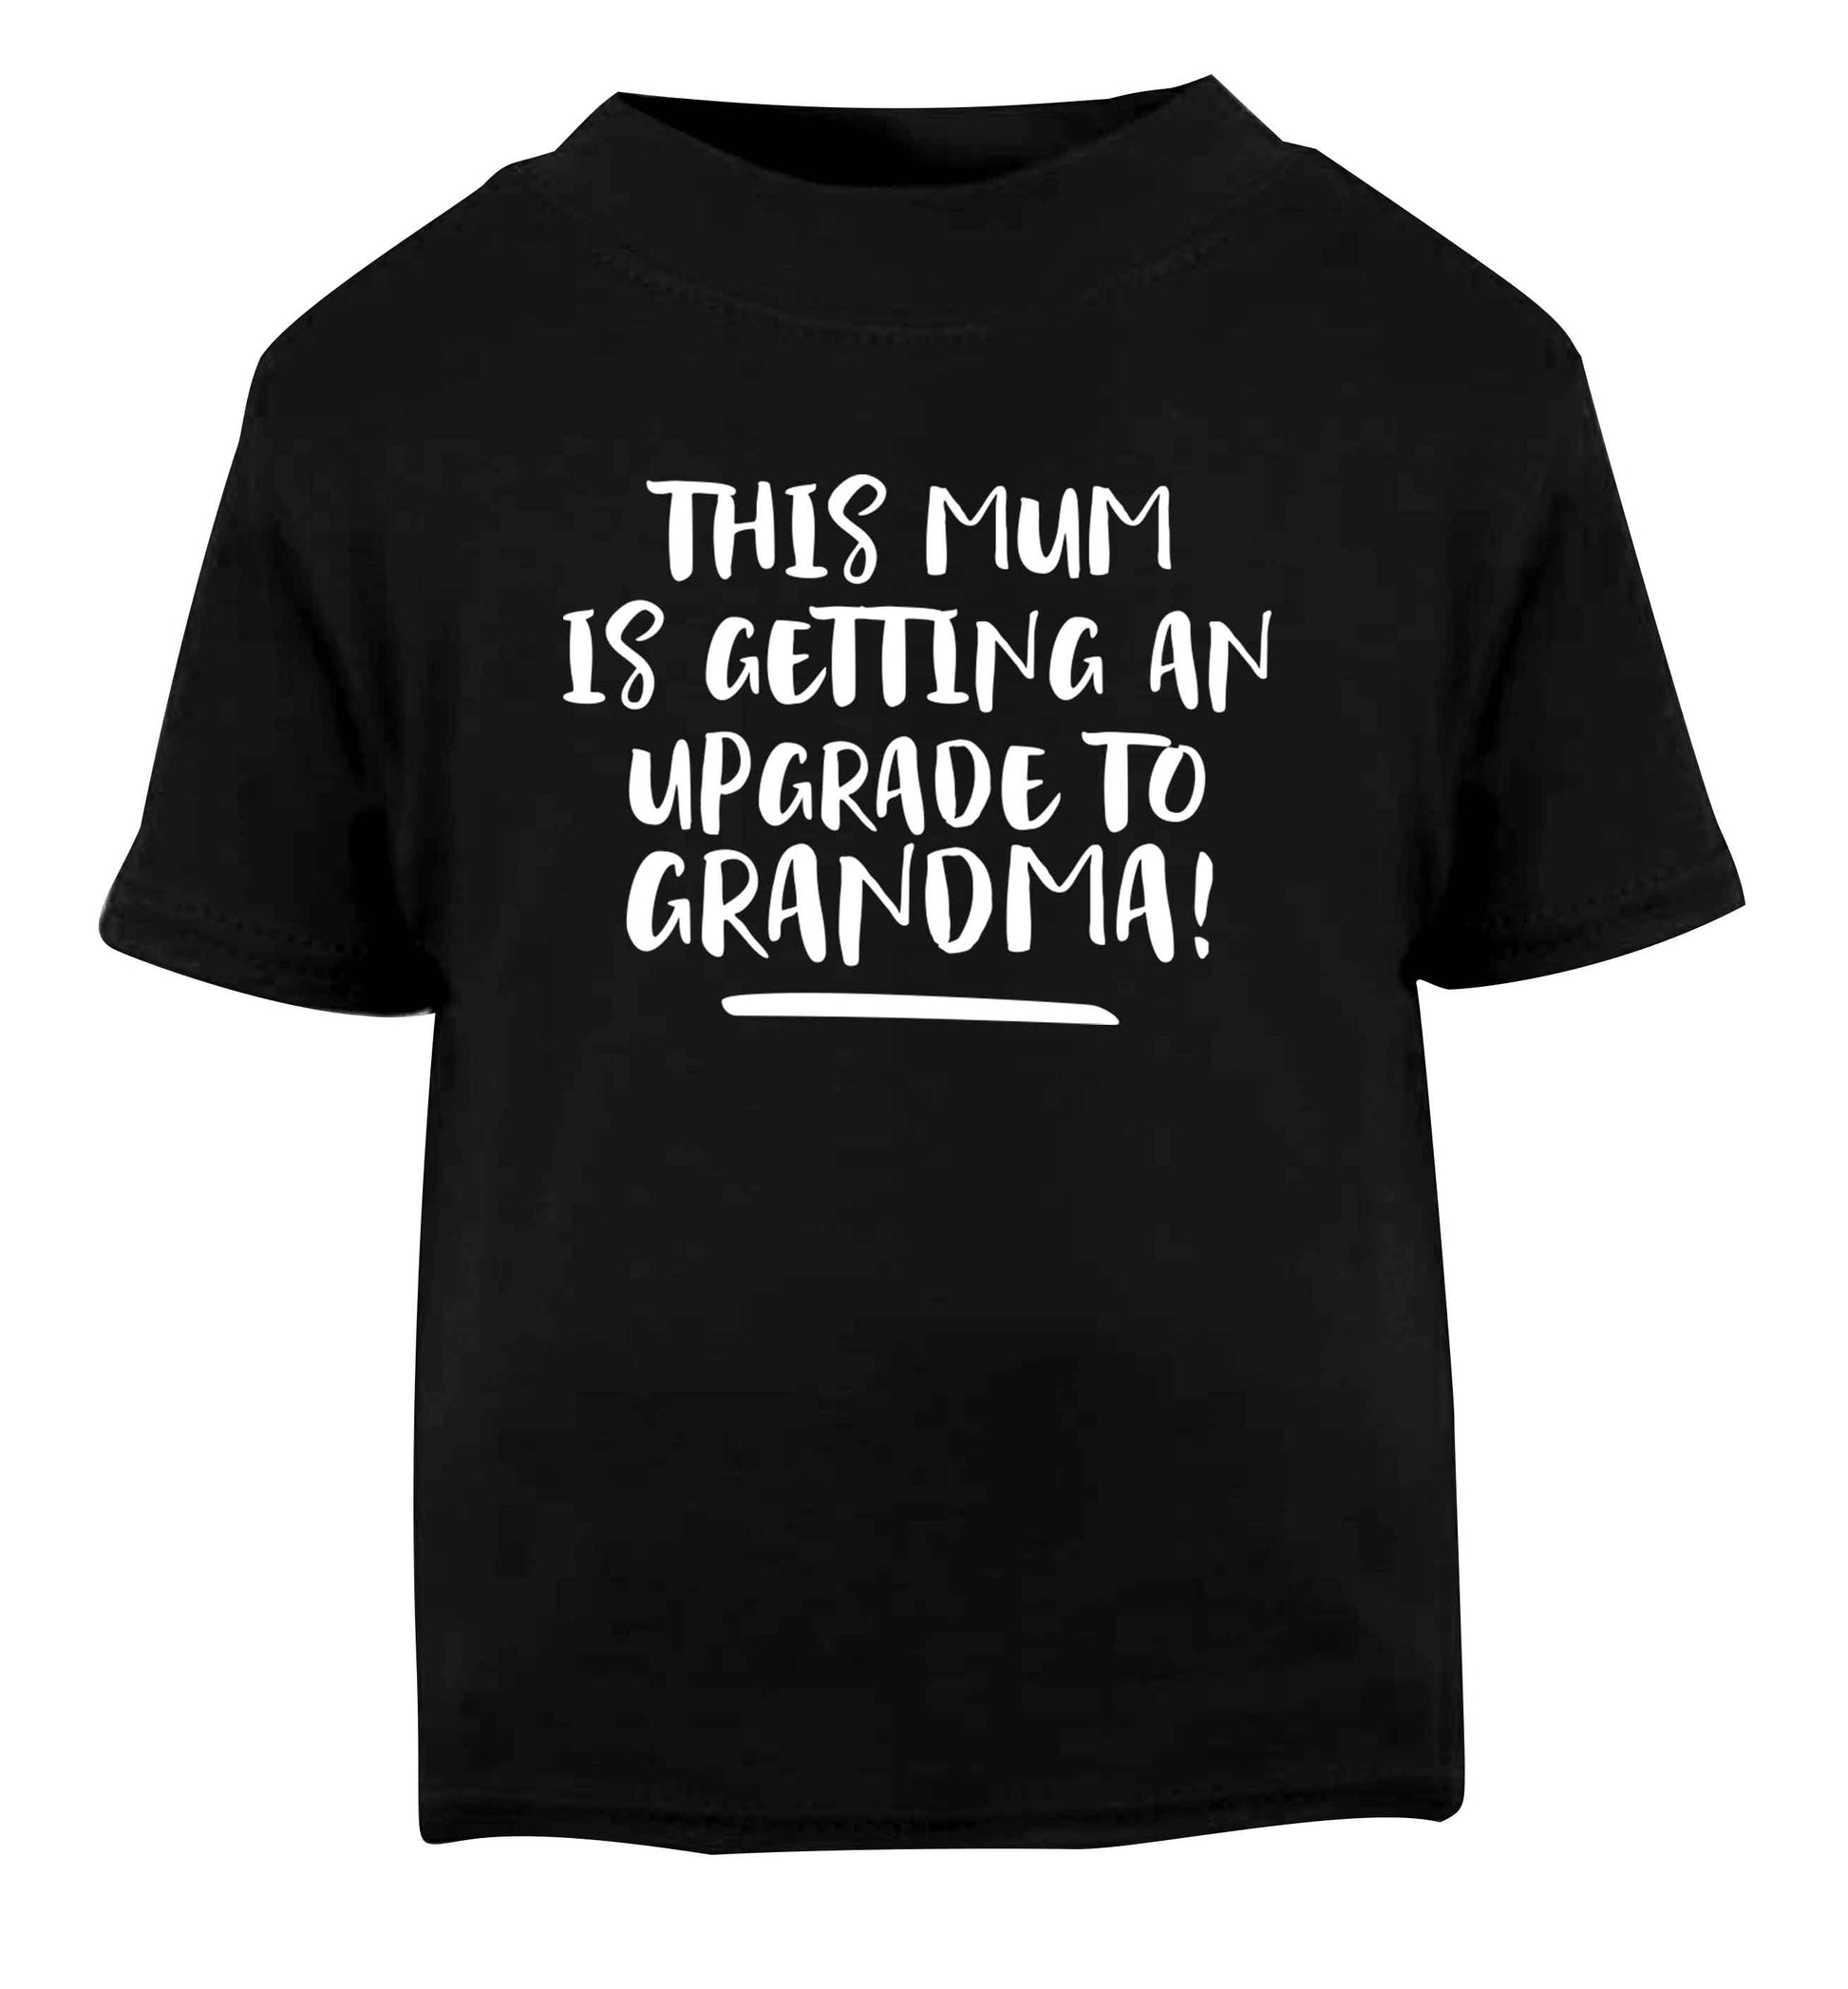 This mum is getting an upgrade to grandma! Black Baby Toddler Tshirt 2 years